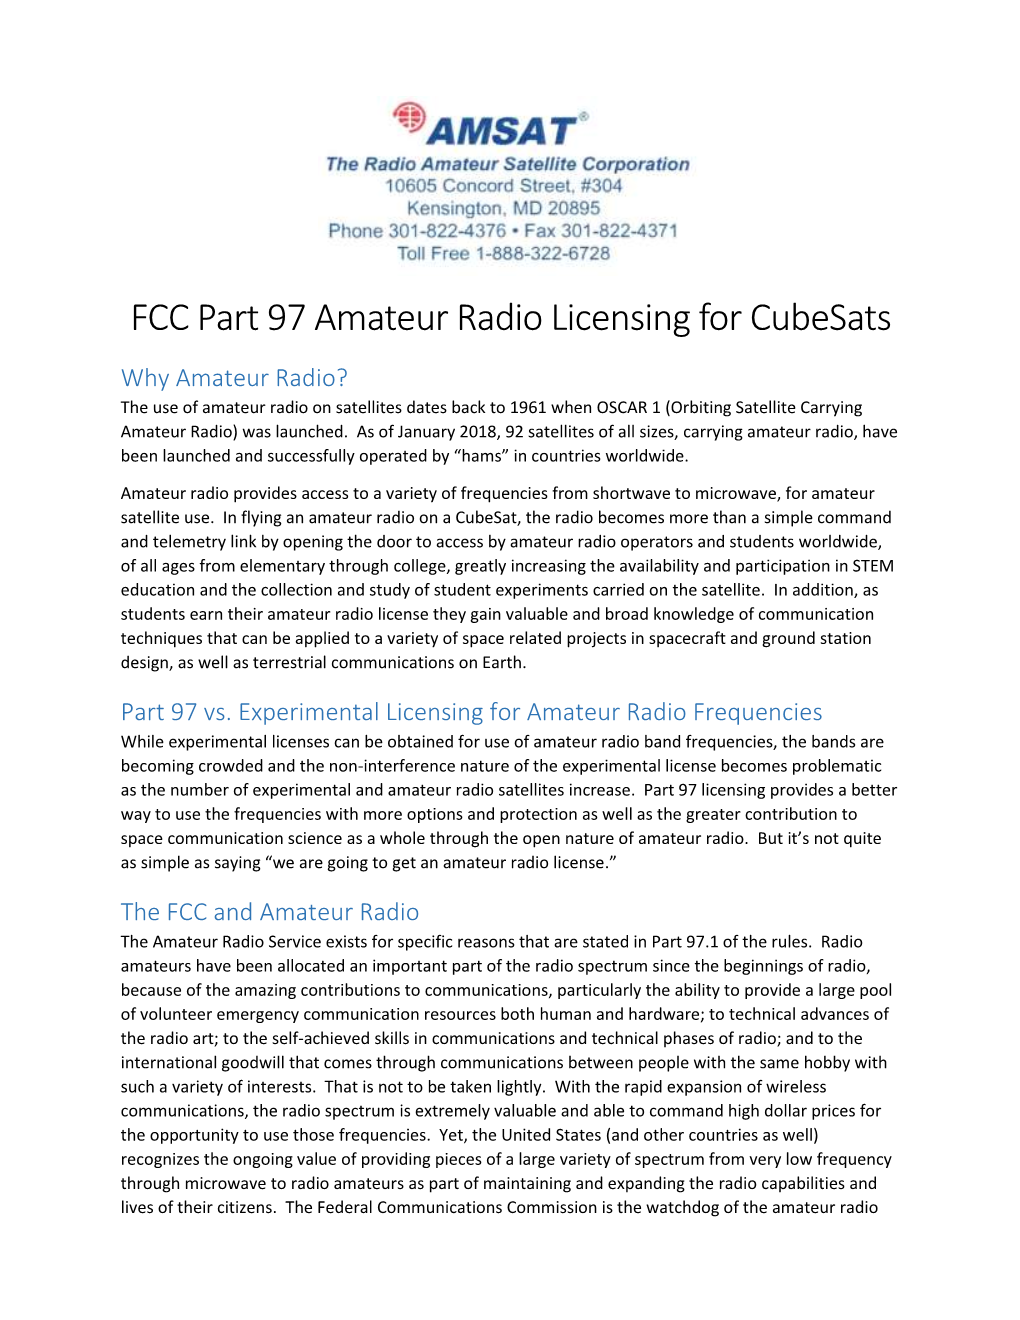 FCC Part 97 Amateur Radio Licensing for Cubesats